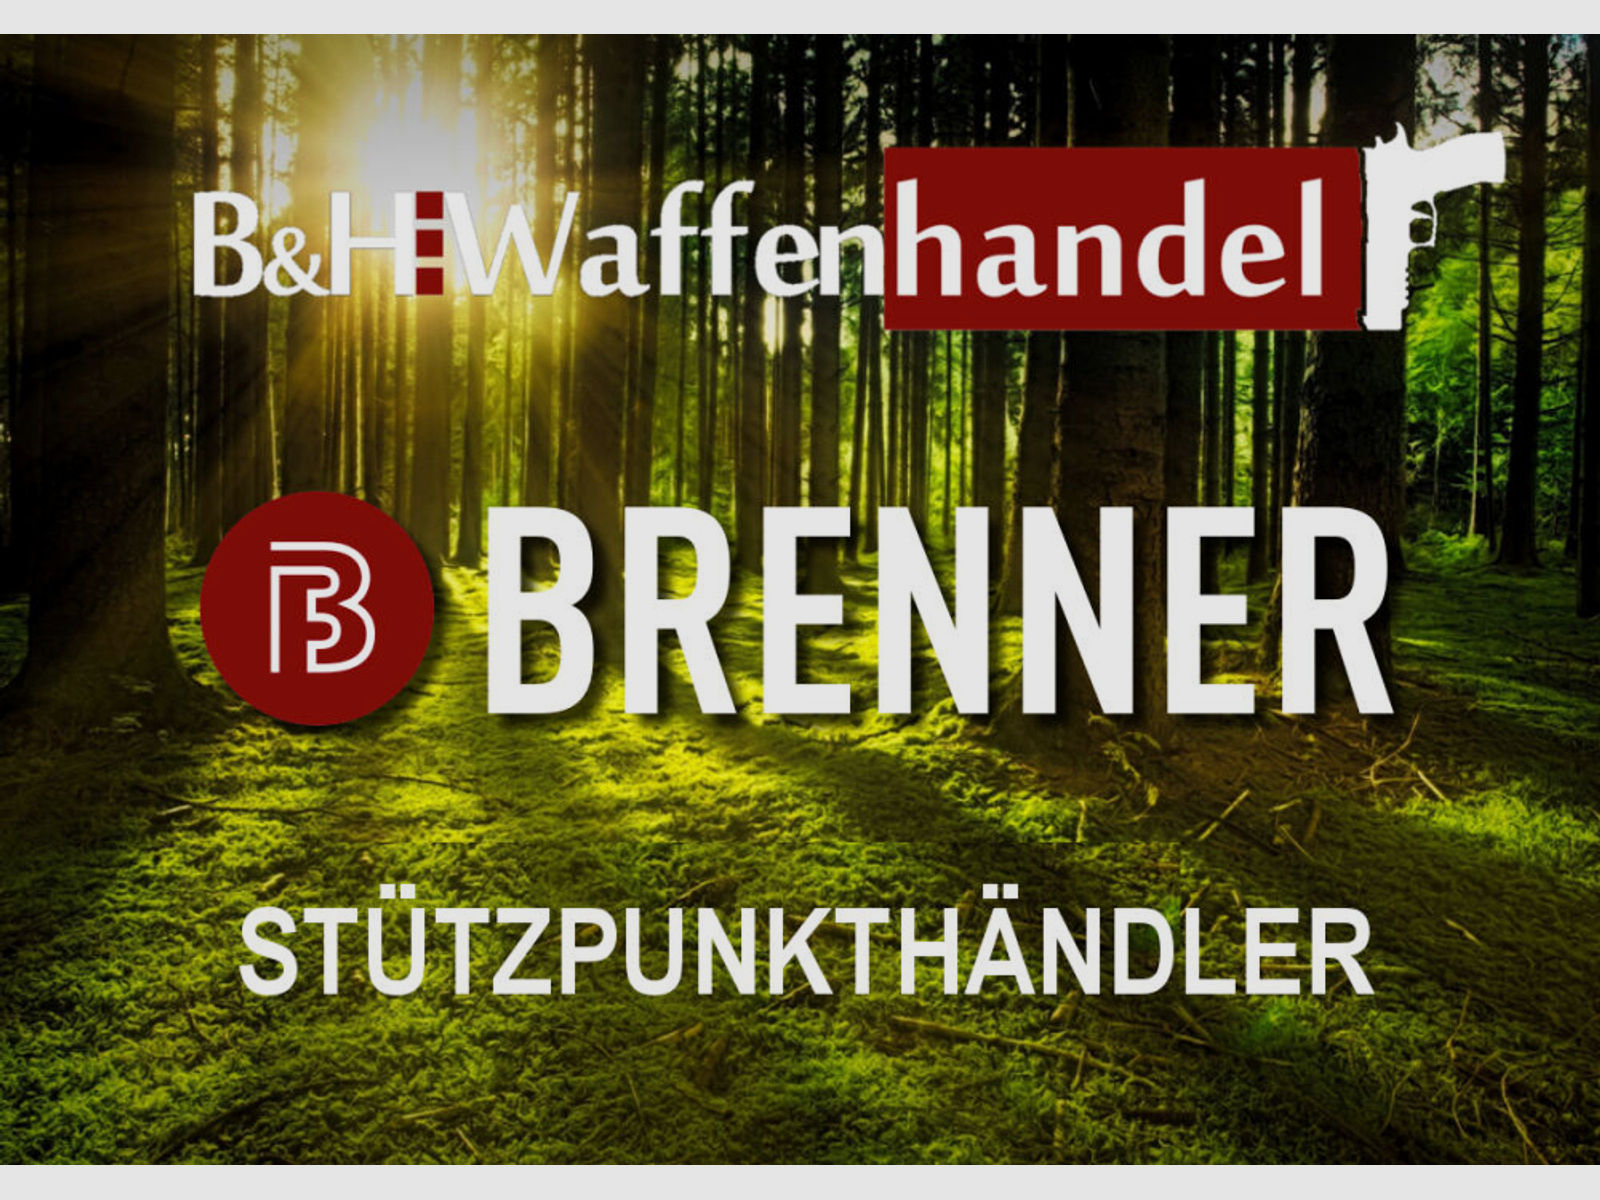 Brenner	 SD21 Schalldämpfer by A-TEC